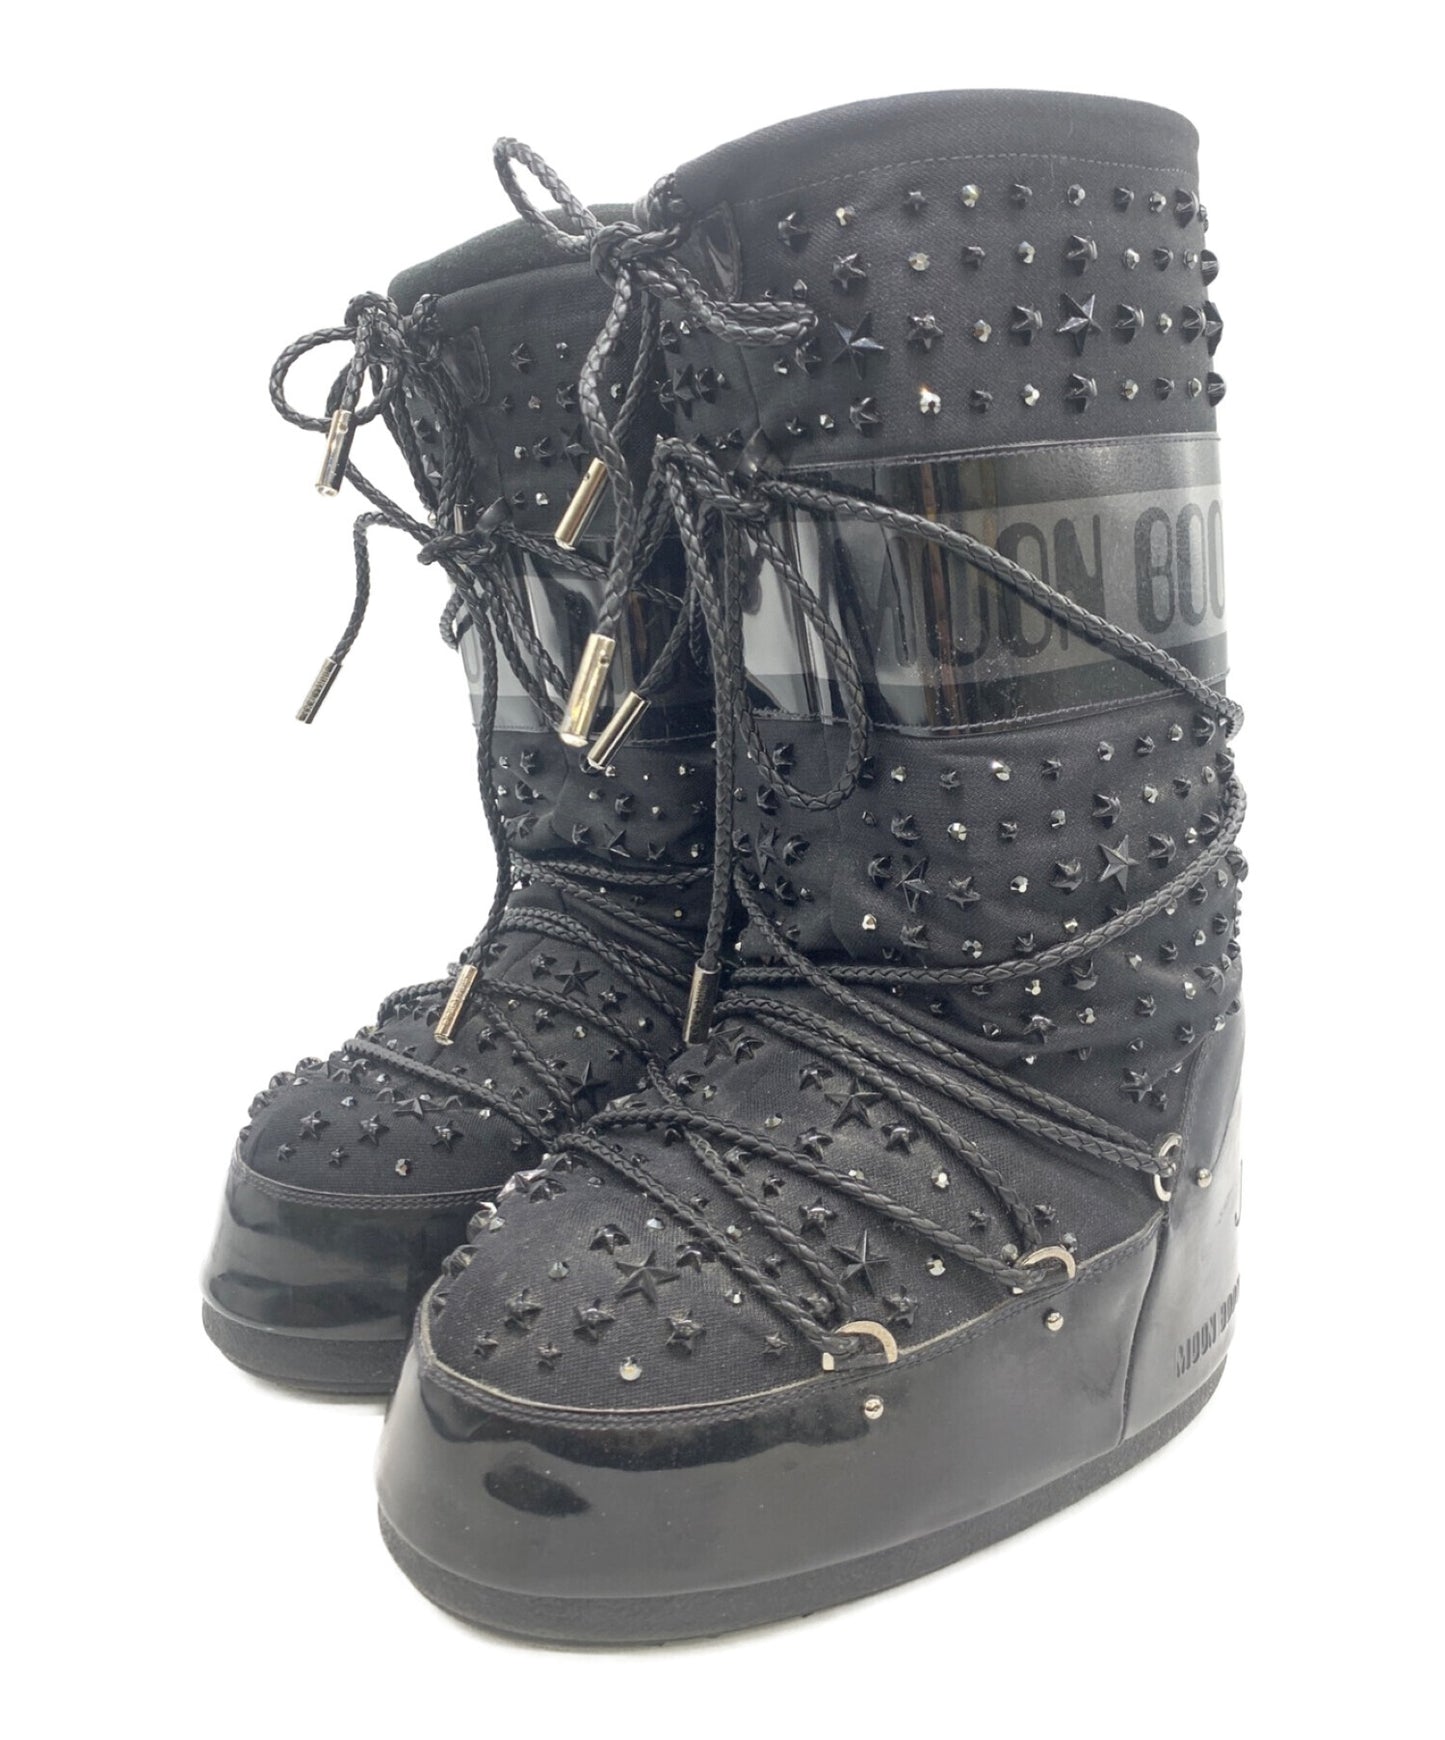 JIMMY CHOO snow boots